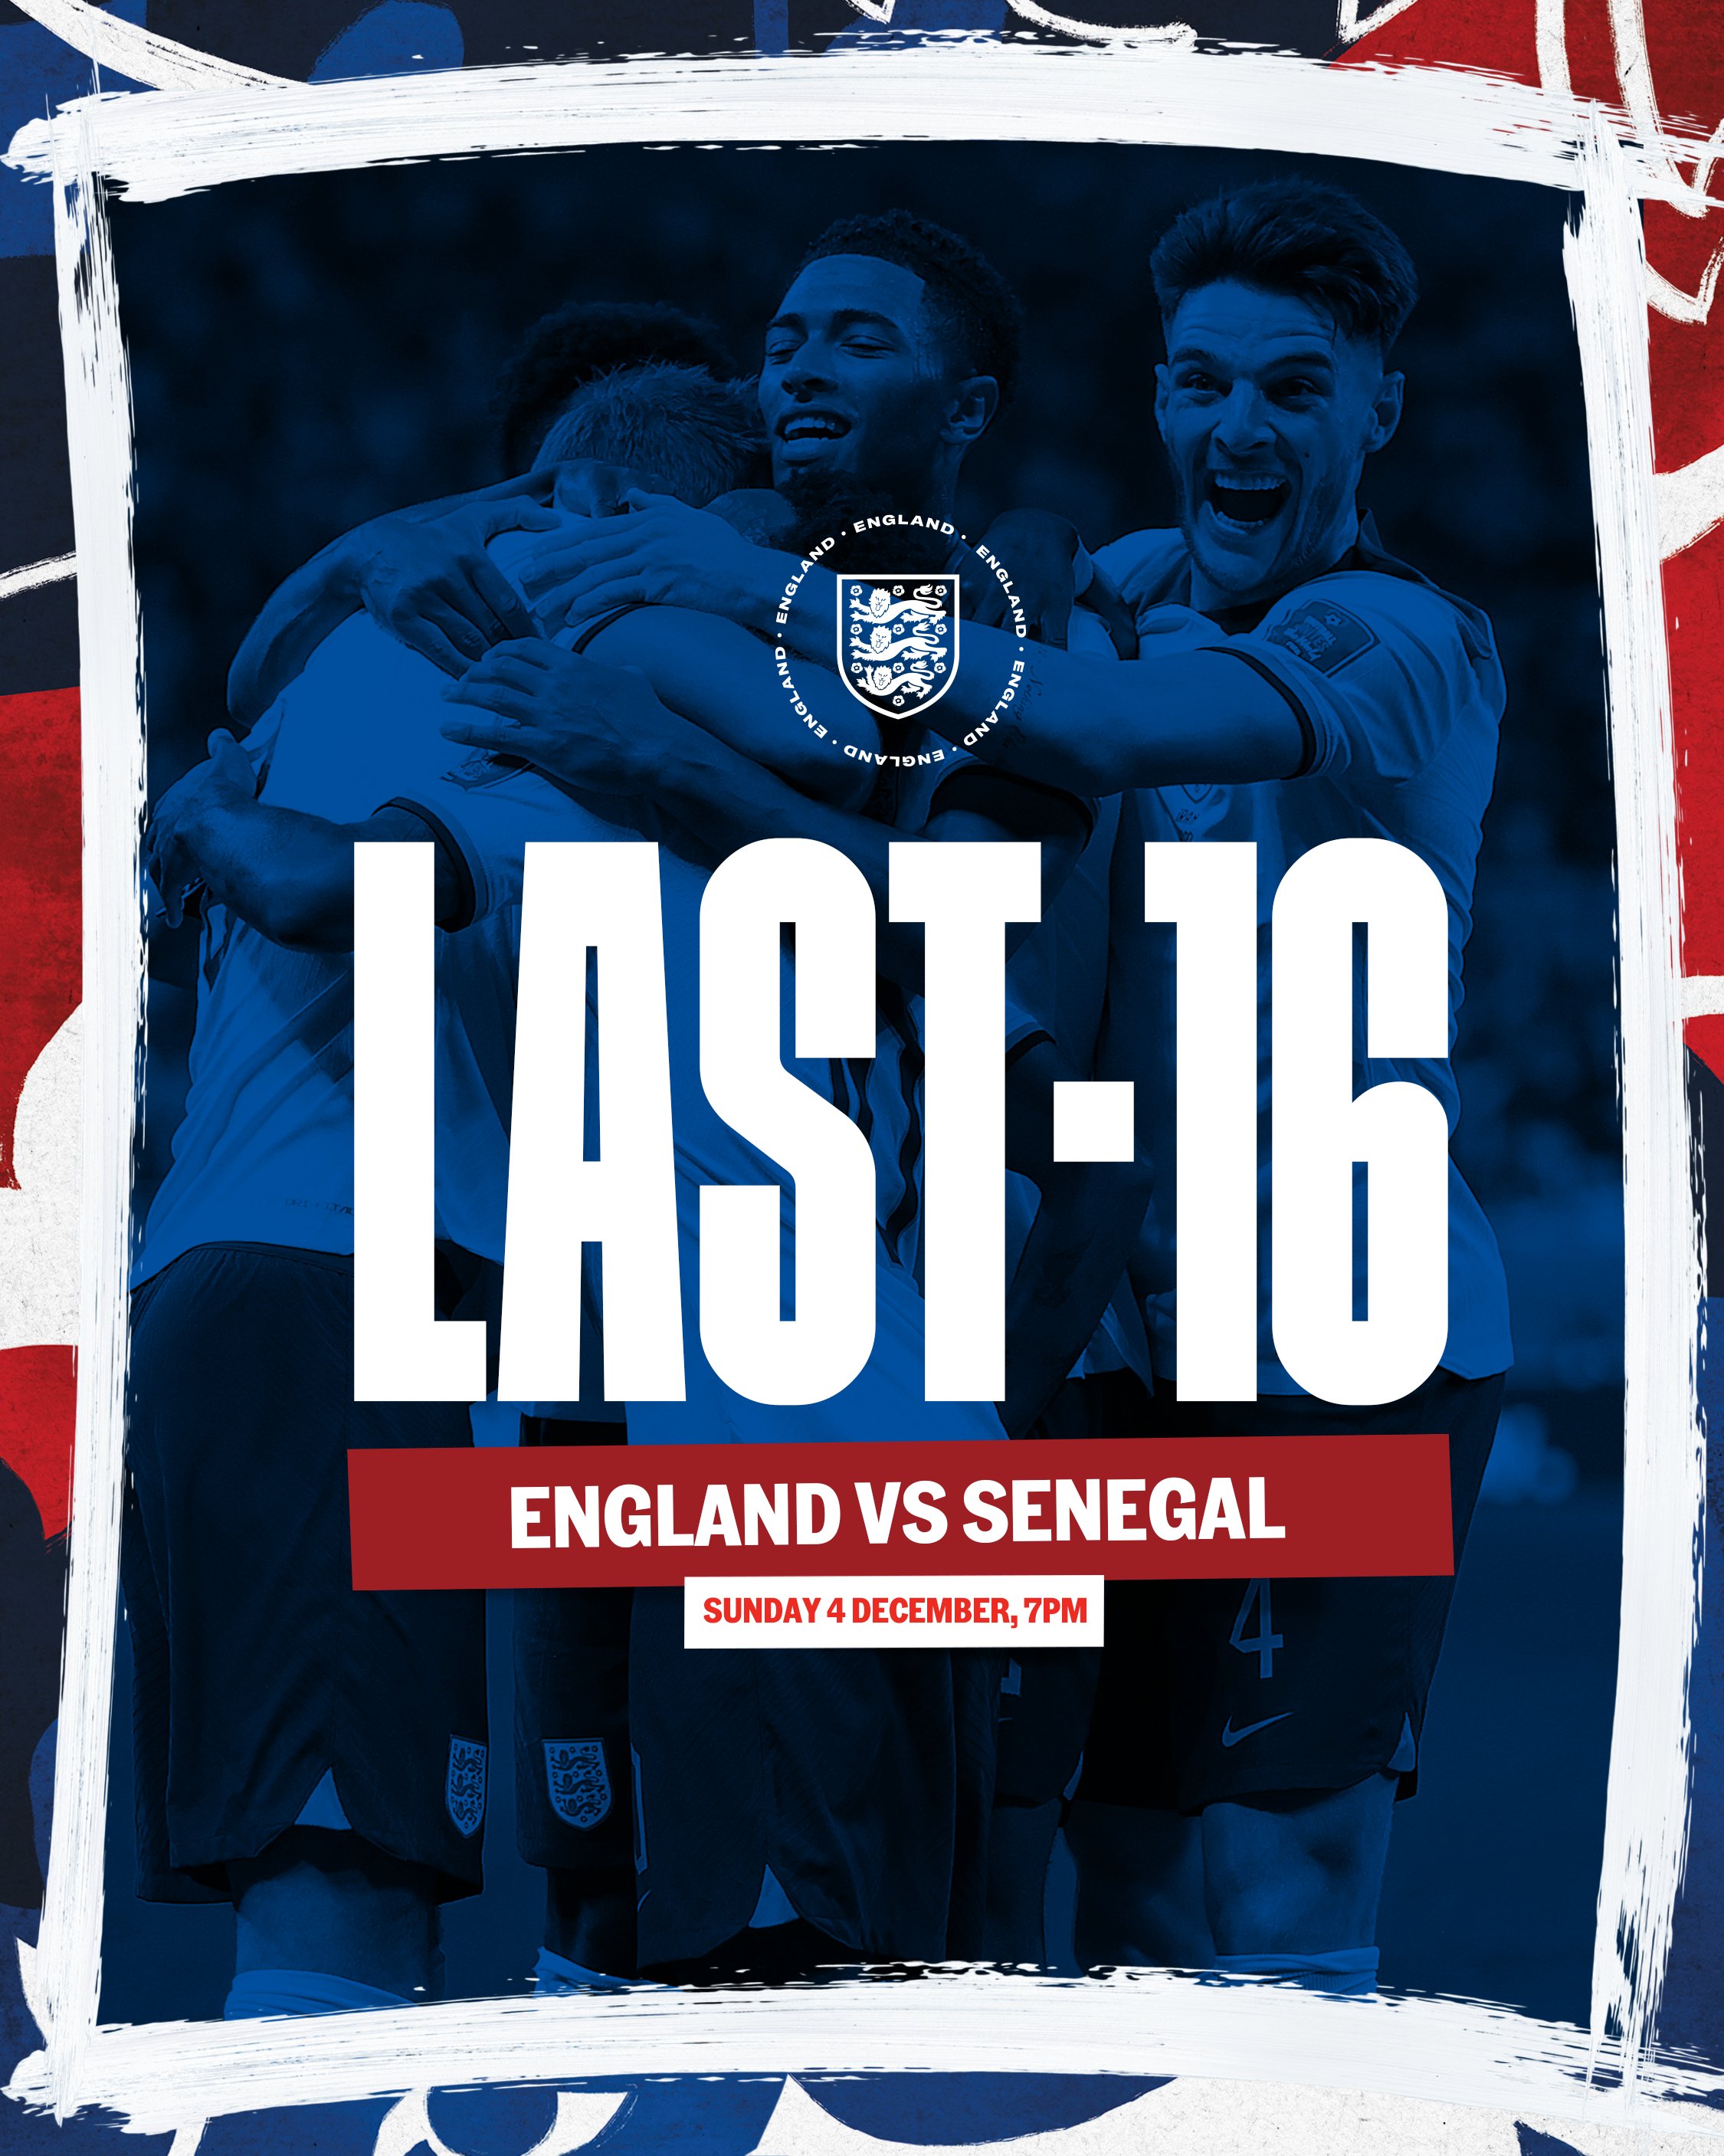 Last-16: England vs Senegal. Sunday 4 December, 7pm.